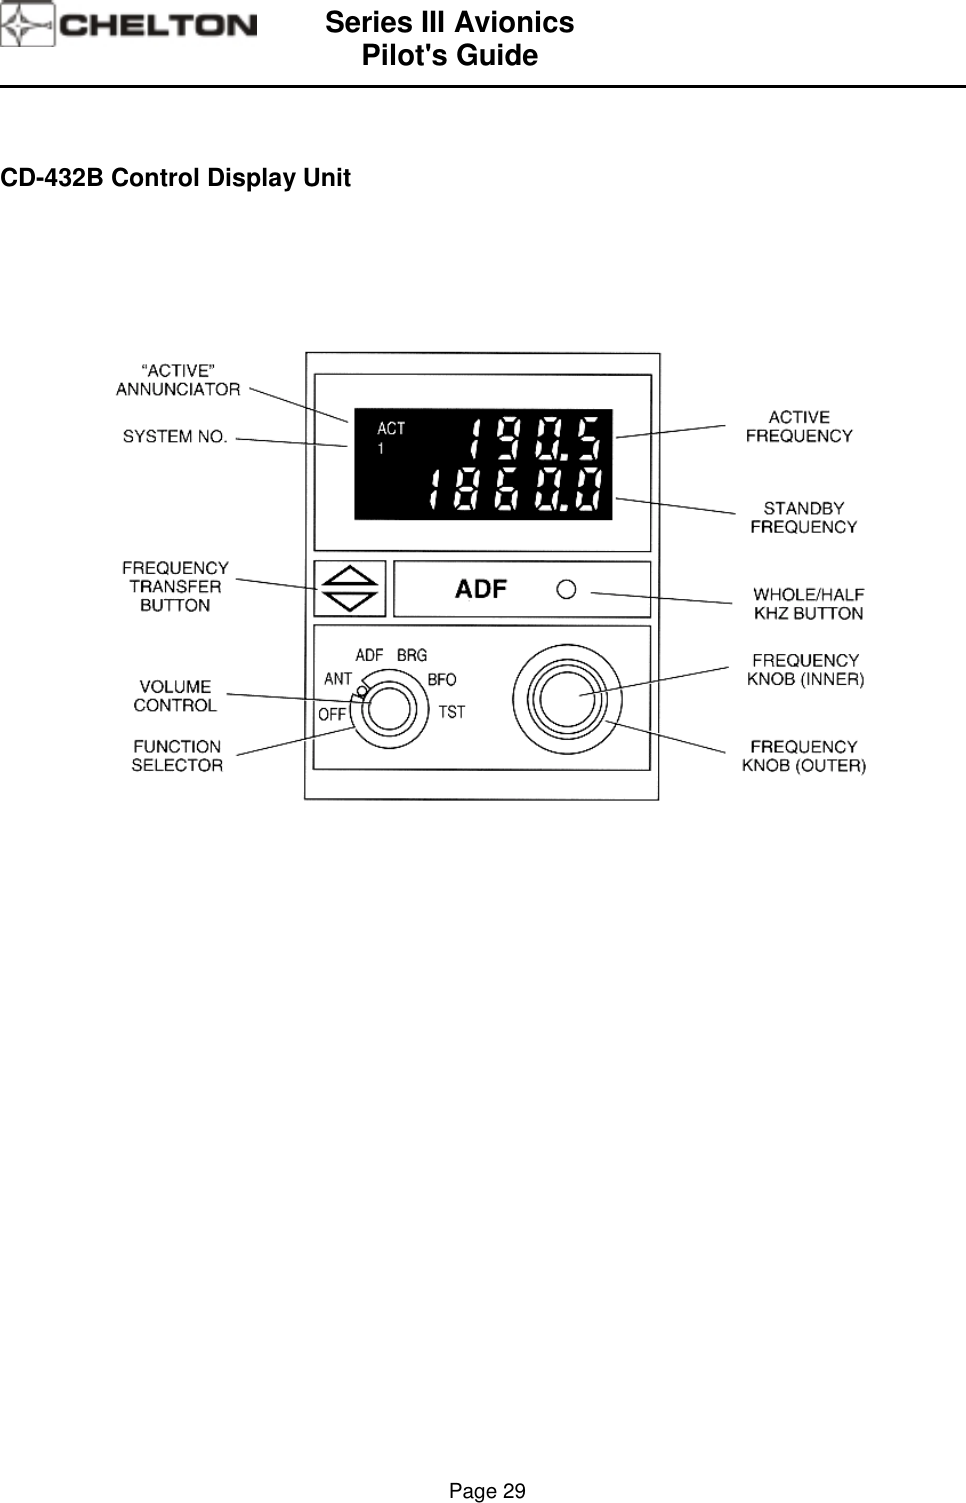 Series III AvionicsPilot&apos;s Guide                                                                                                                                          Page 29CD-432B Control Display Unit